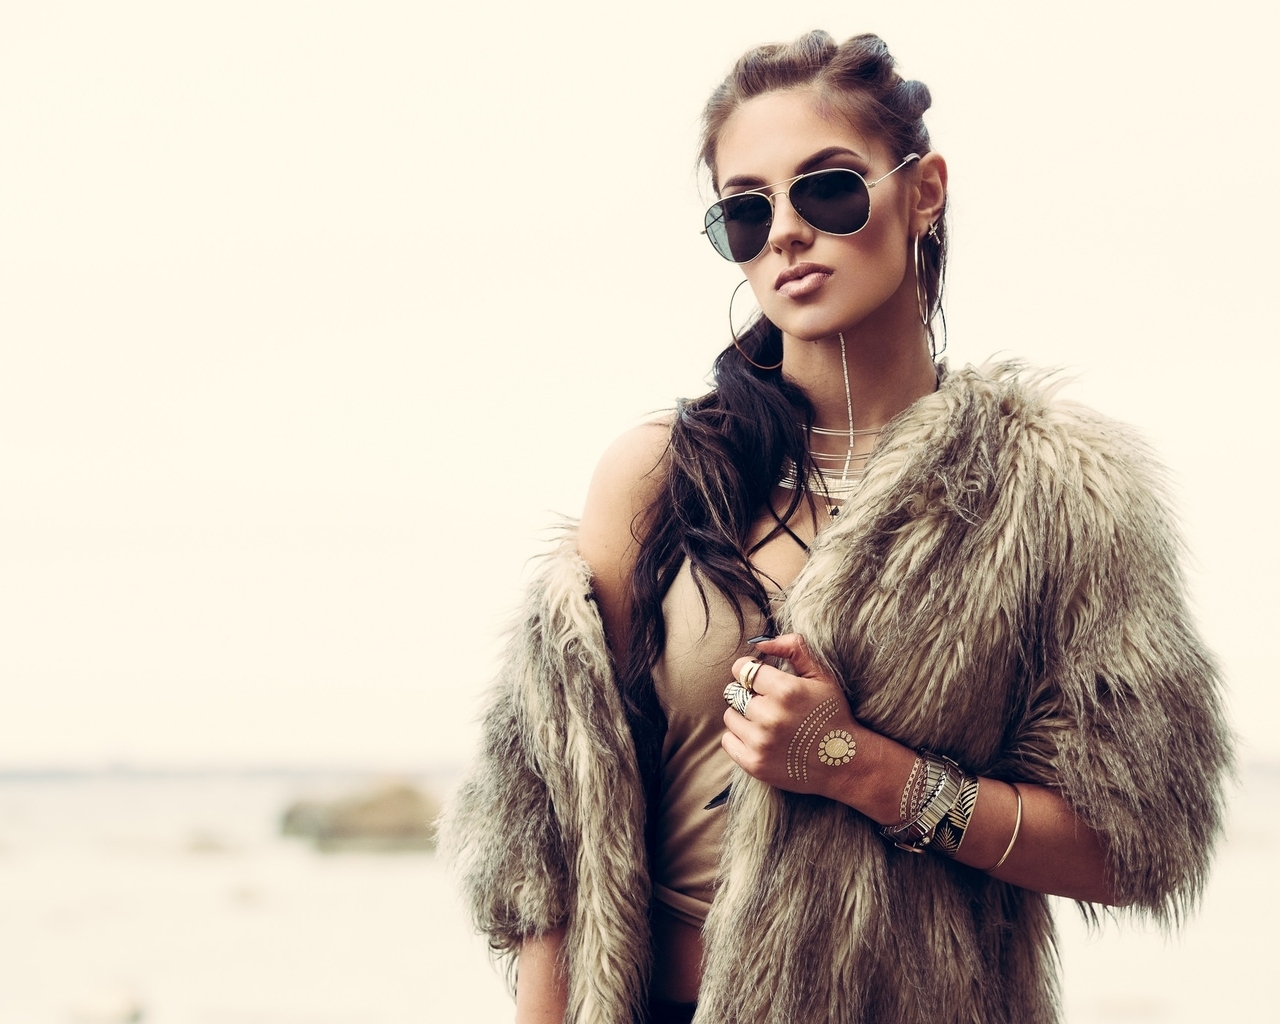 Image: Brunette, girl, model, fur coat, fur, style, makeup, jewelry, glasses